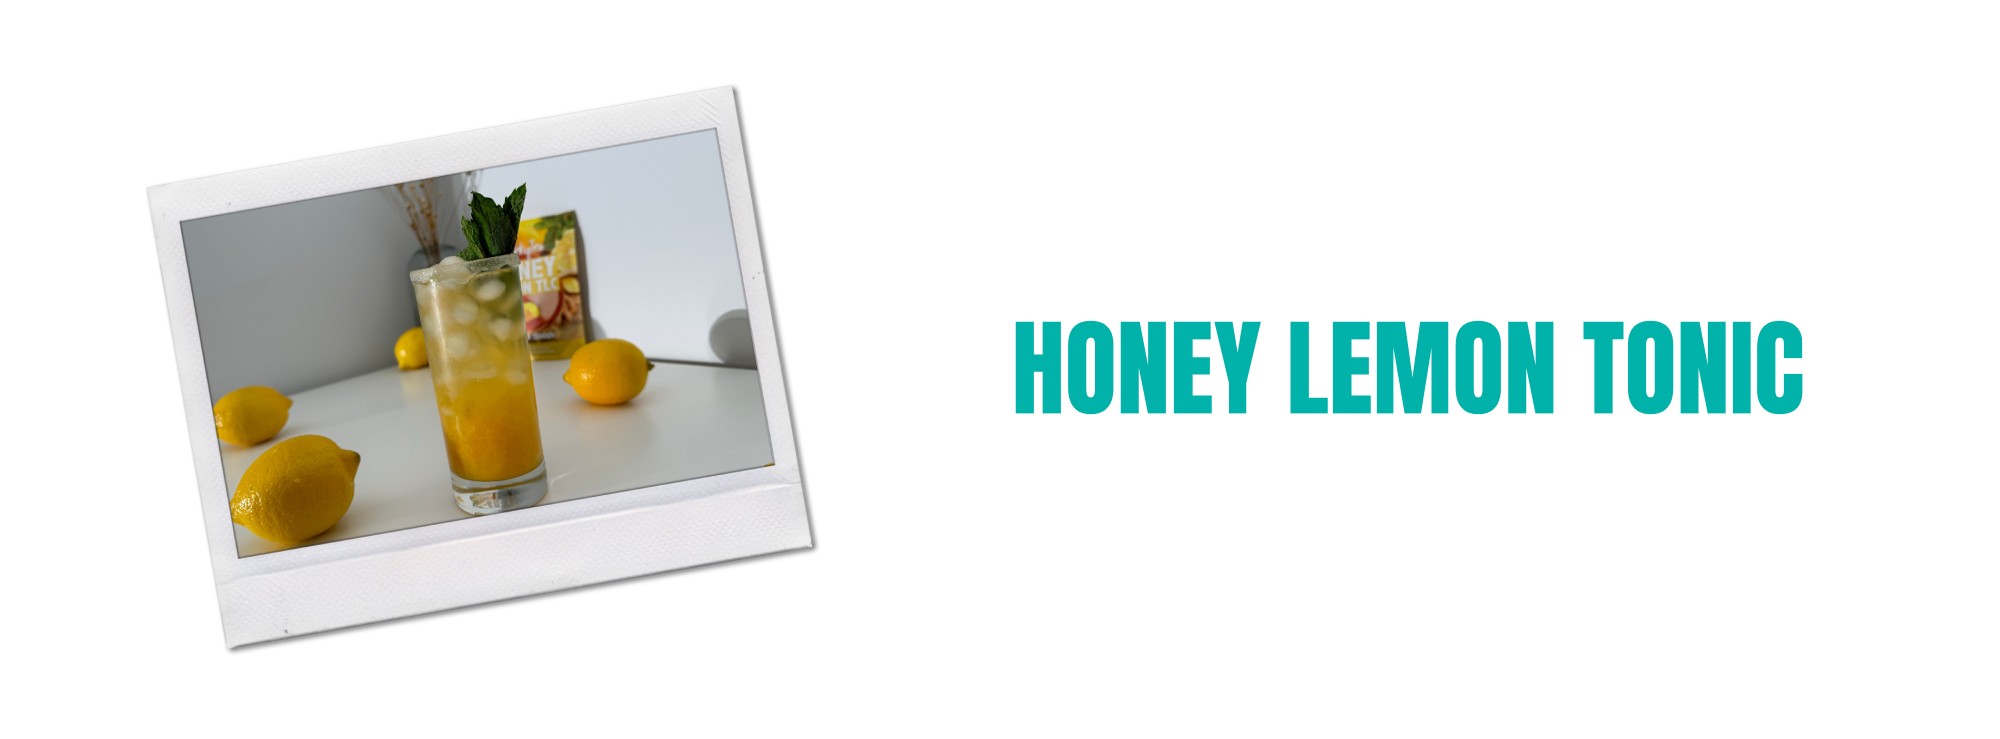 Honey Lemon Tonic